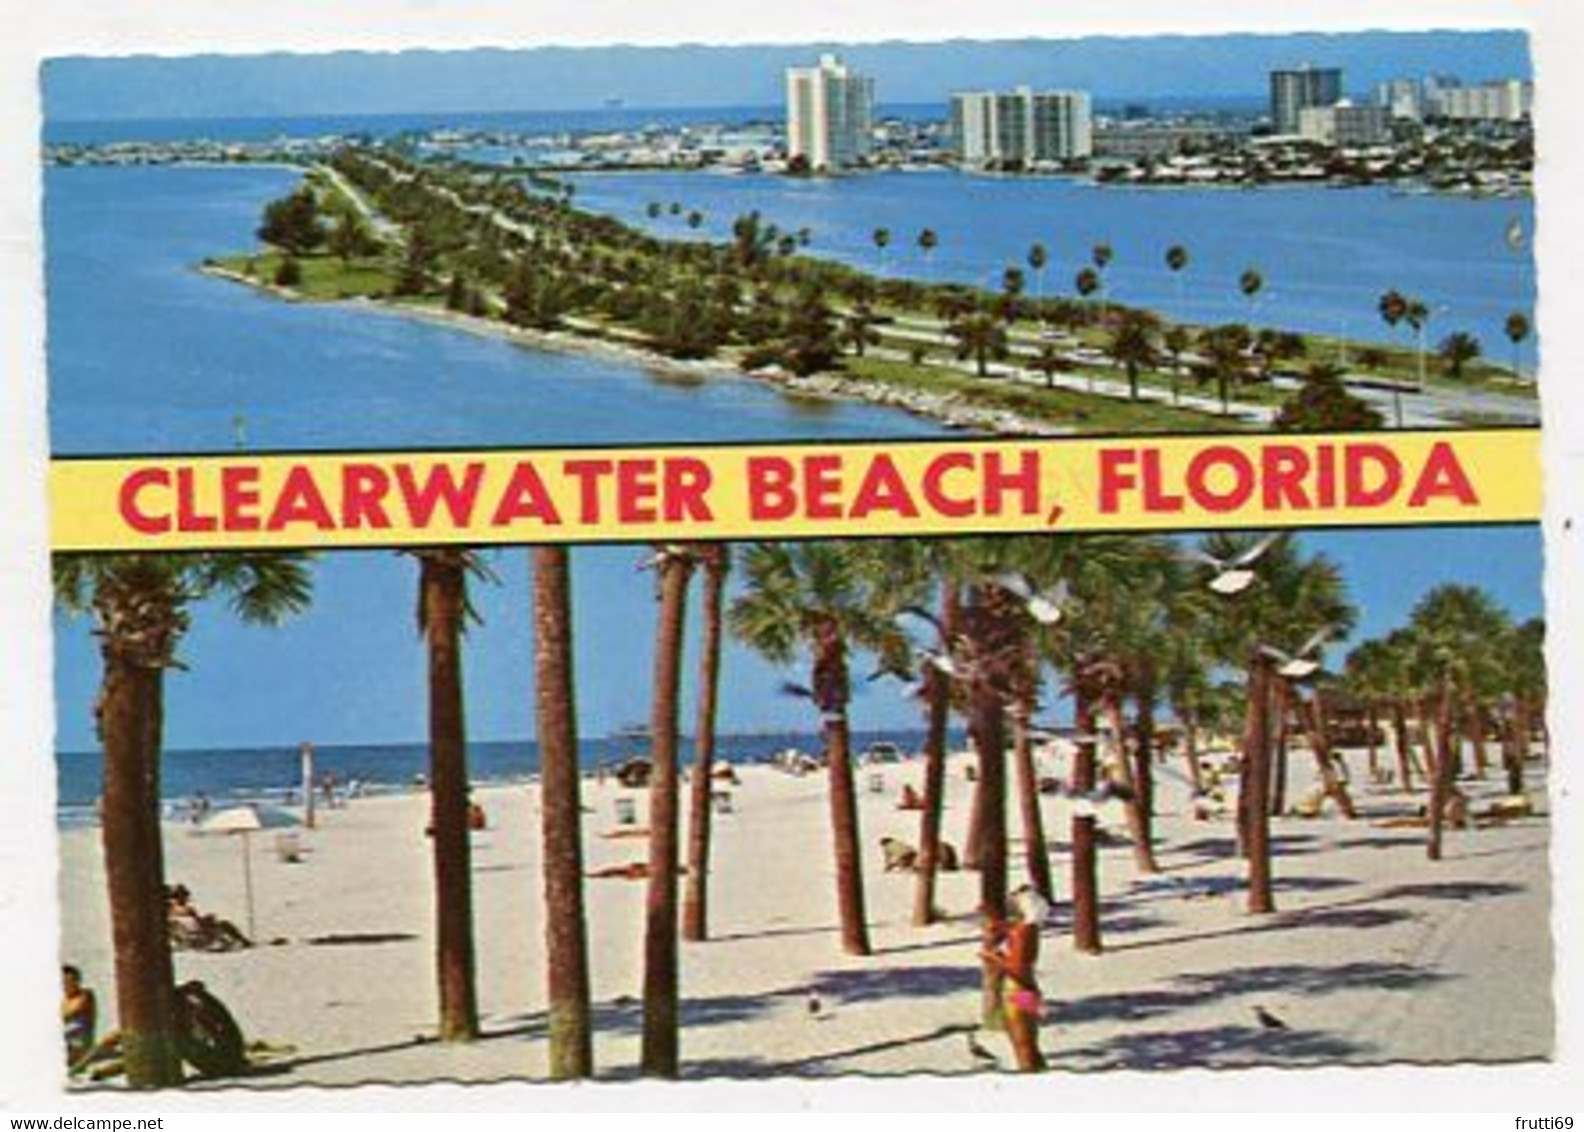 AK 016937 USA - Florida - Clearwater Beach - Clearwater